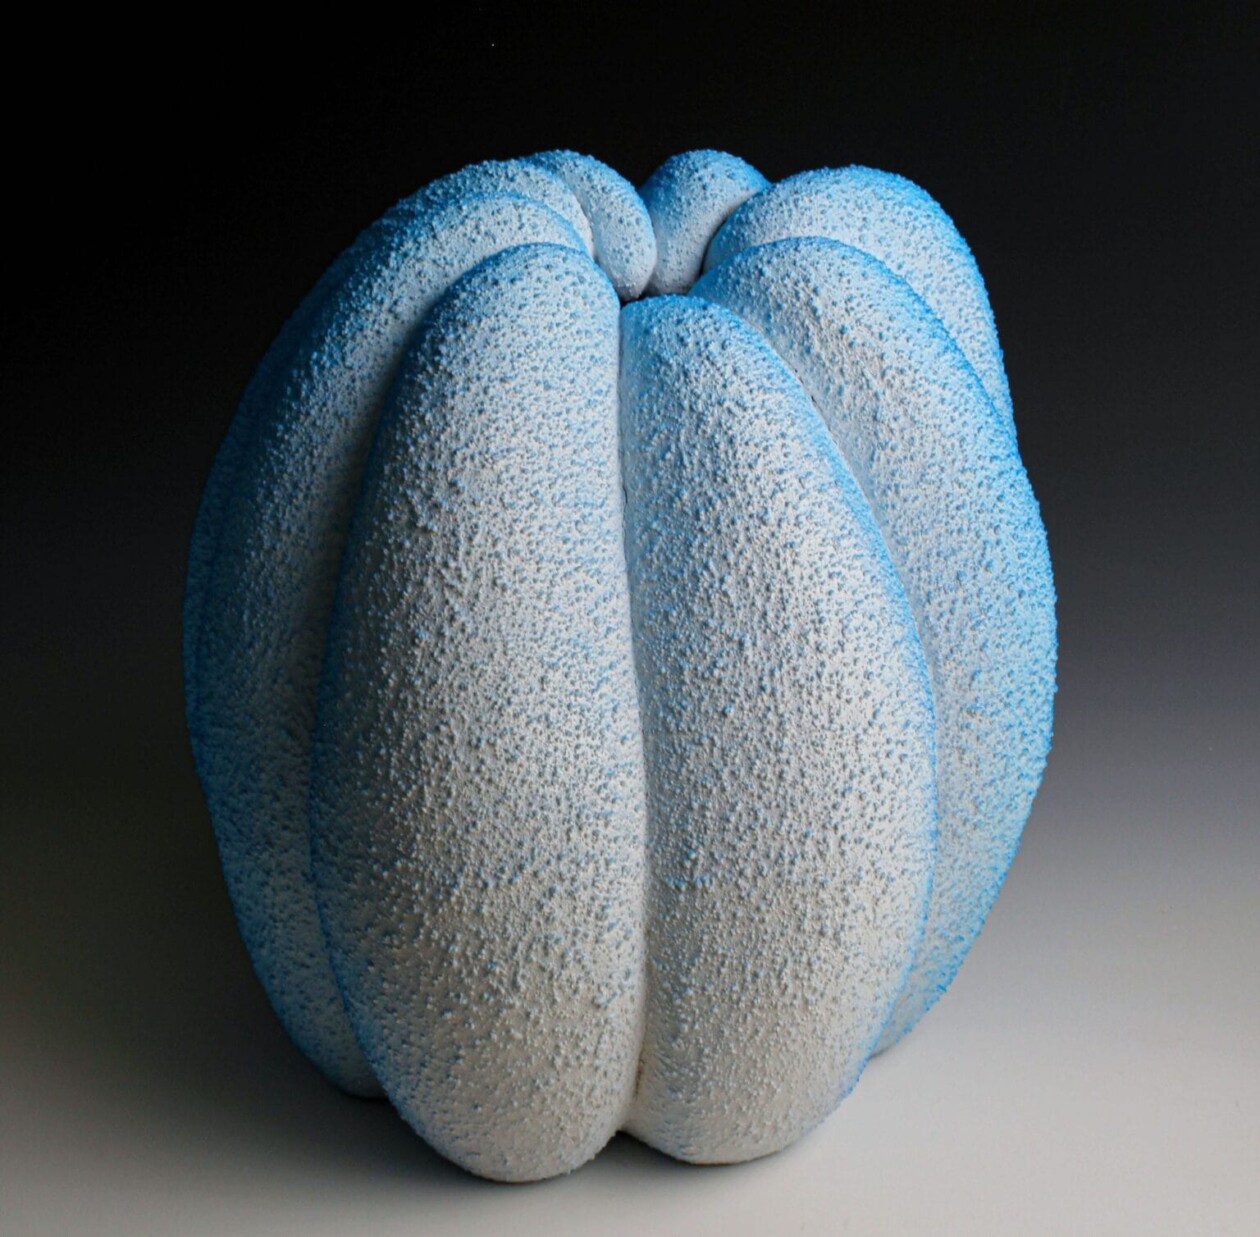 Glowing Sculptural Ceramic Vessels By Maxwell Mustardo (10)